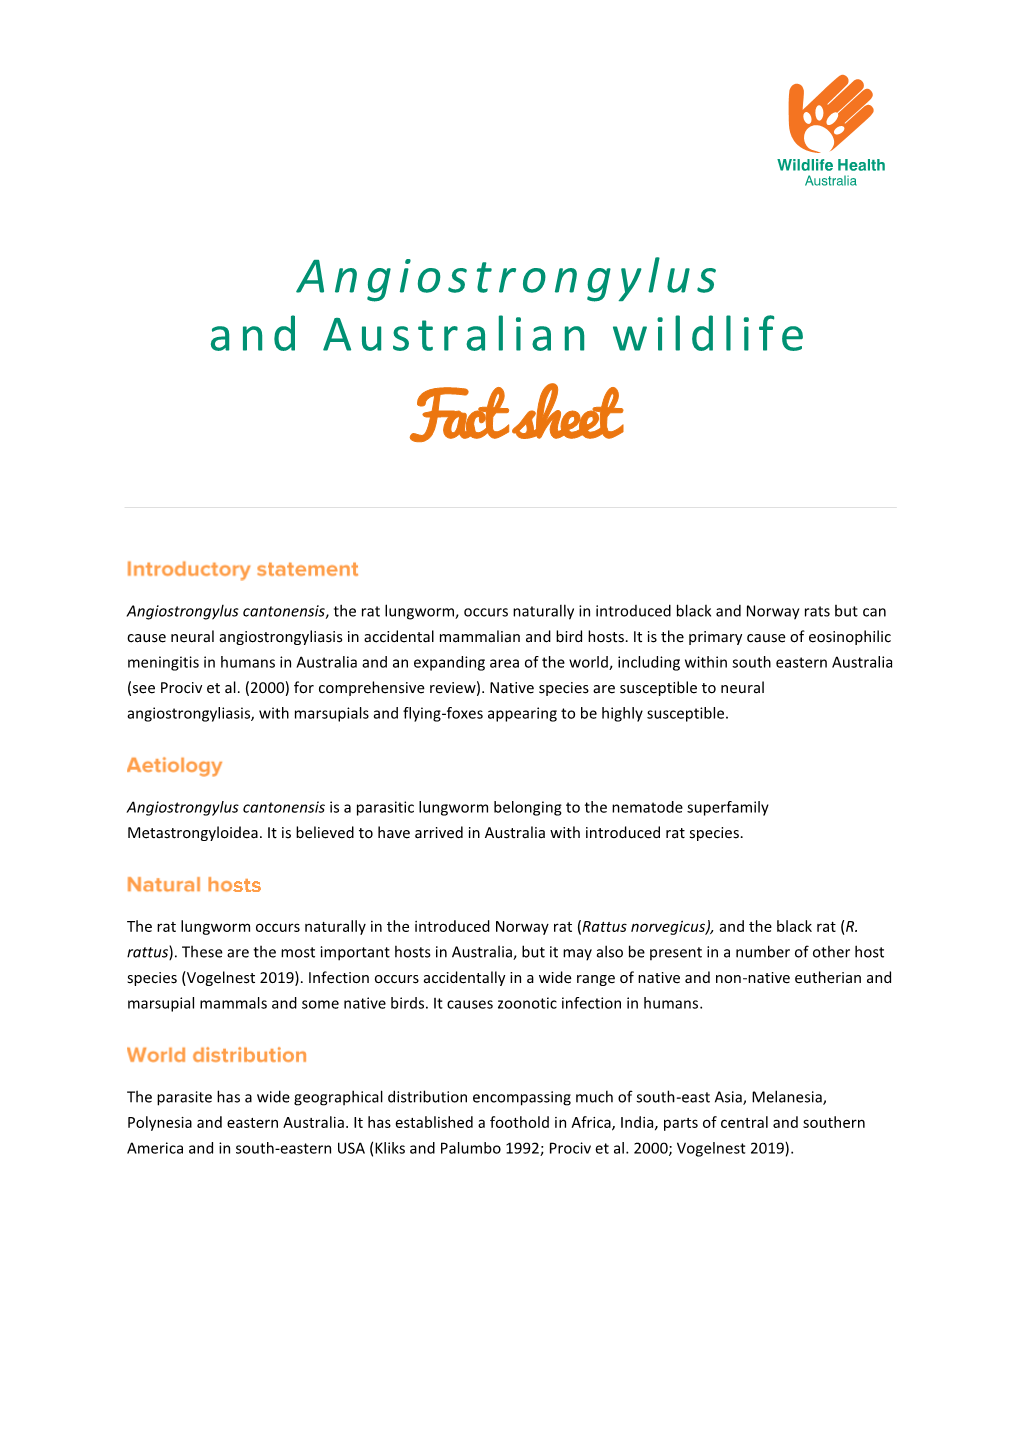 Angiostrongylus and Australian Wildlife Fact Sheet